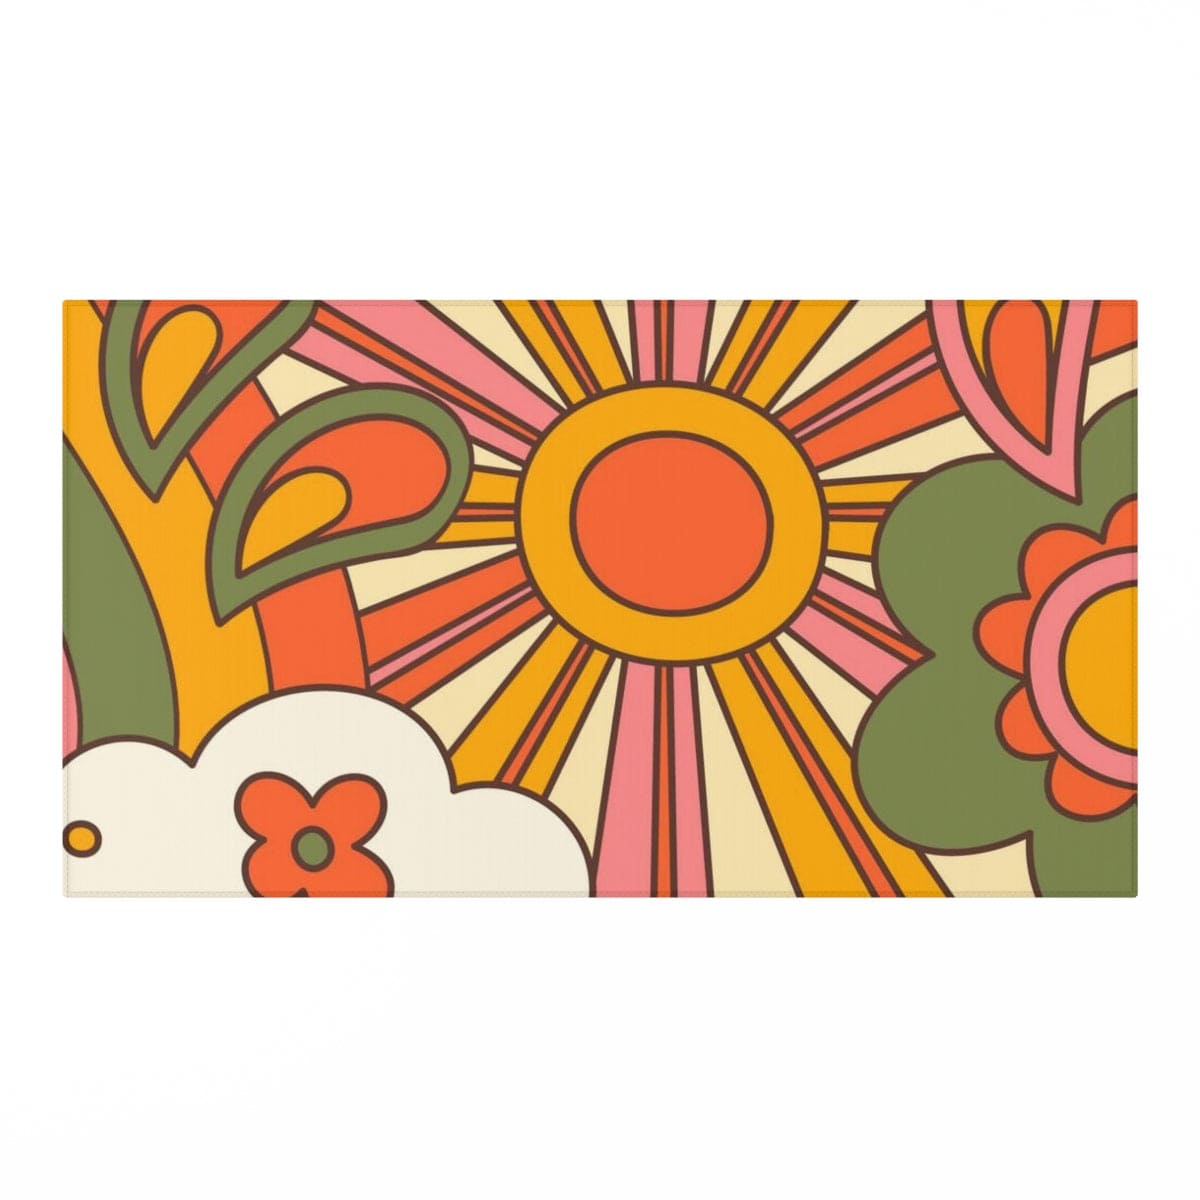 Hippie Groovy Flower Background By Mulew Art